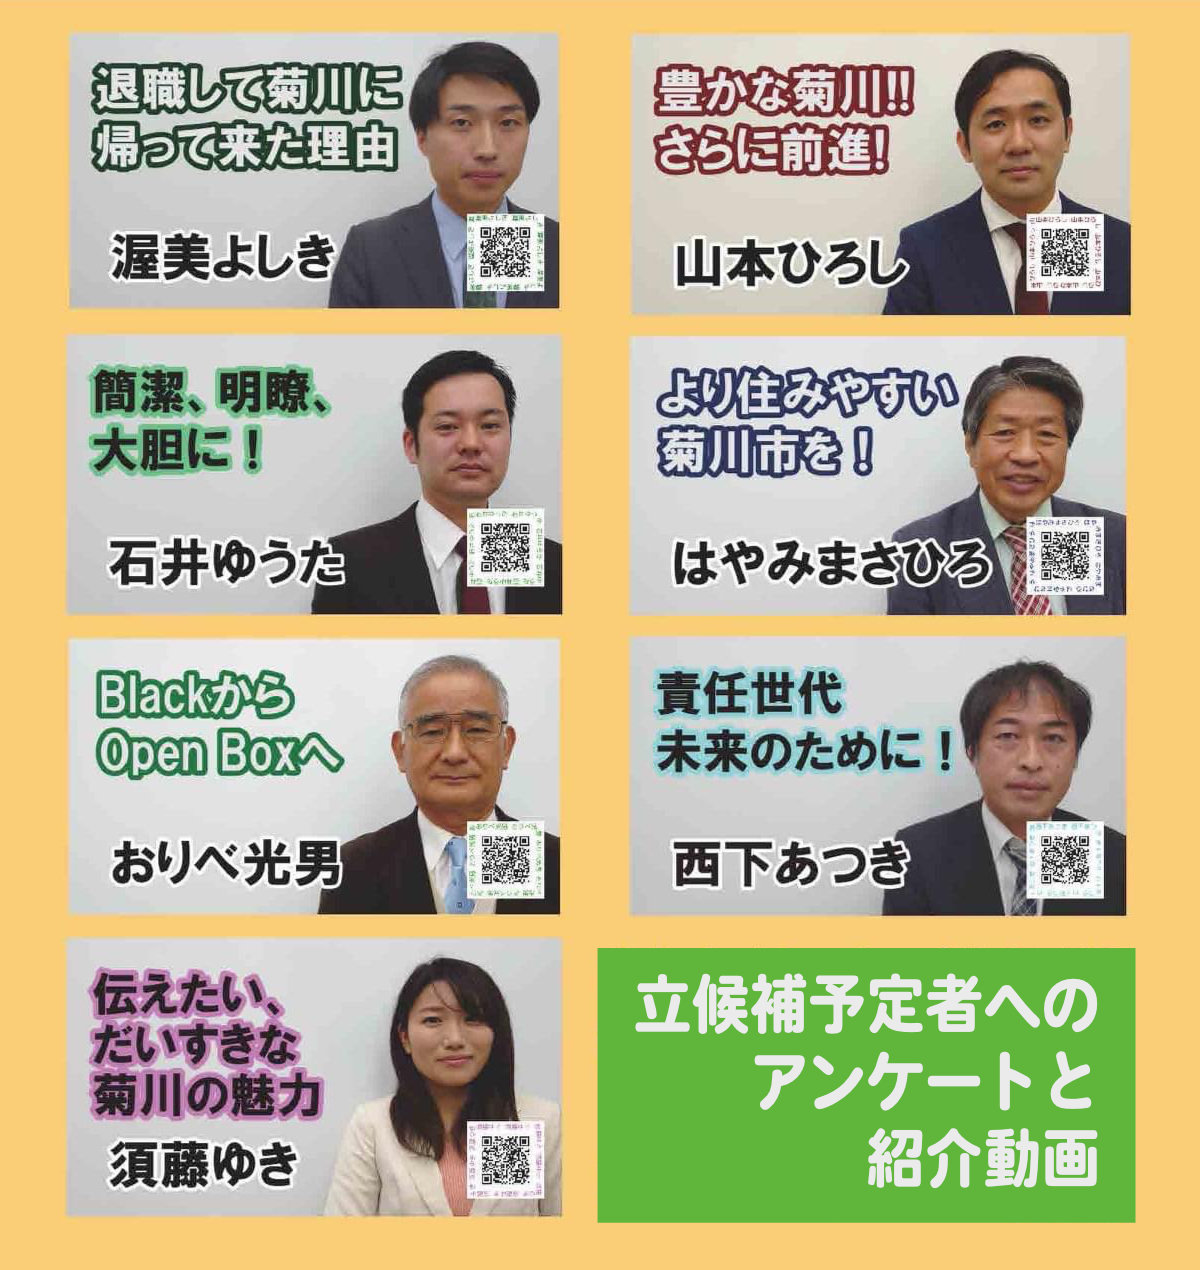 2021-07-03 WordPress アイキャッチ画像：菊川市議選挙候補予定者へのアンケートと紹介動画